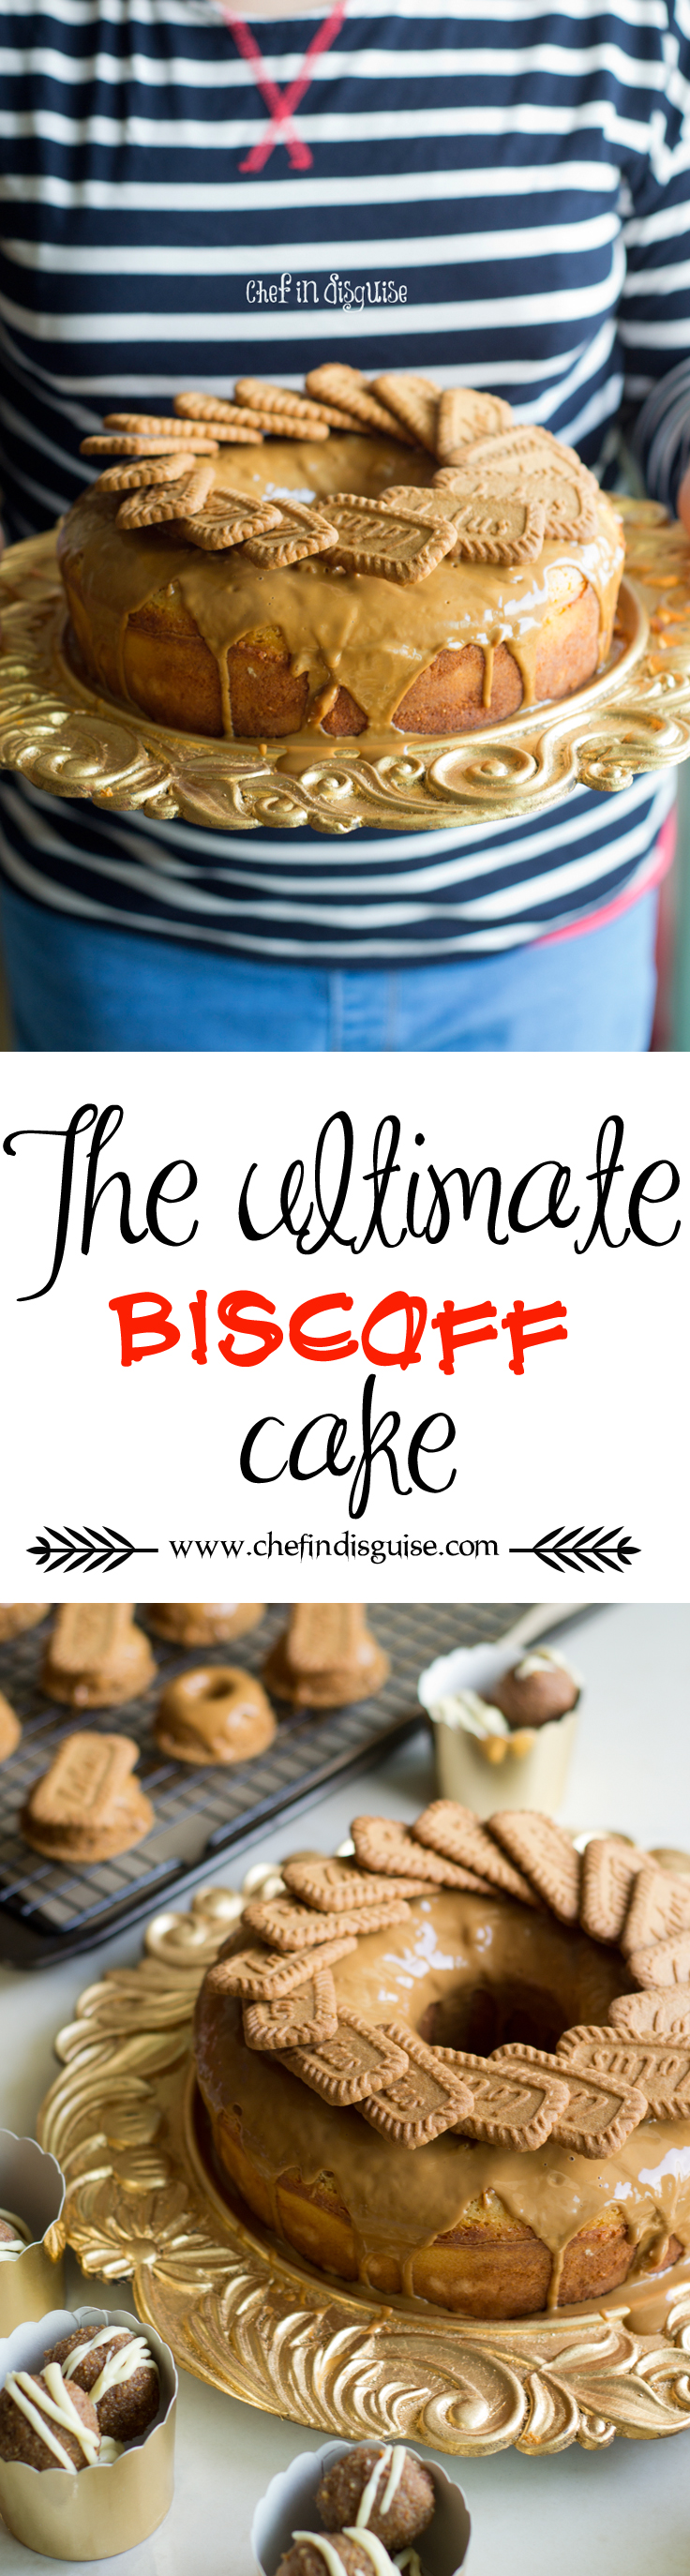 Biscoff cake